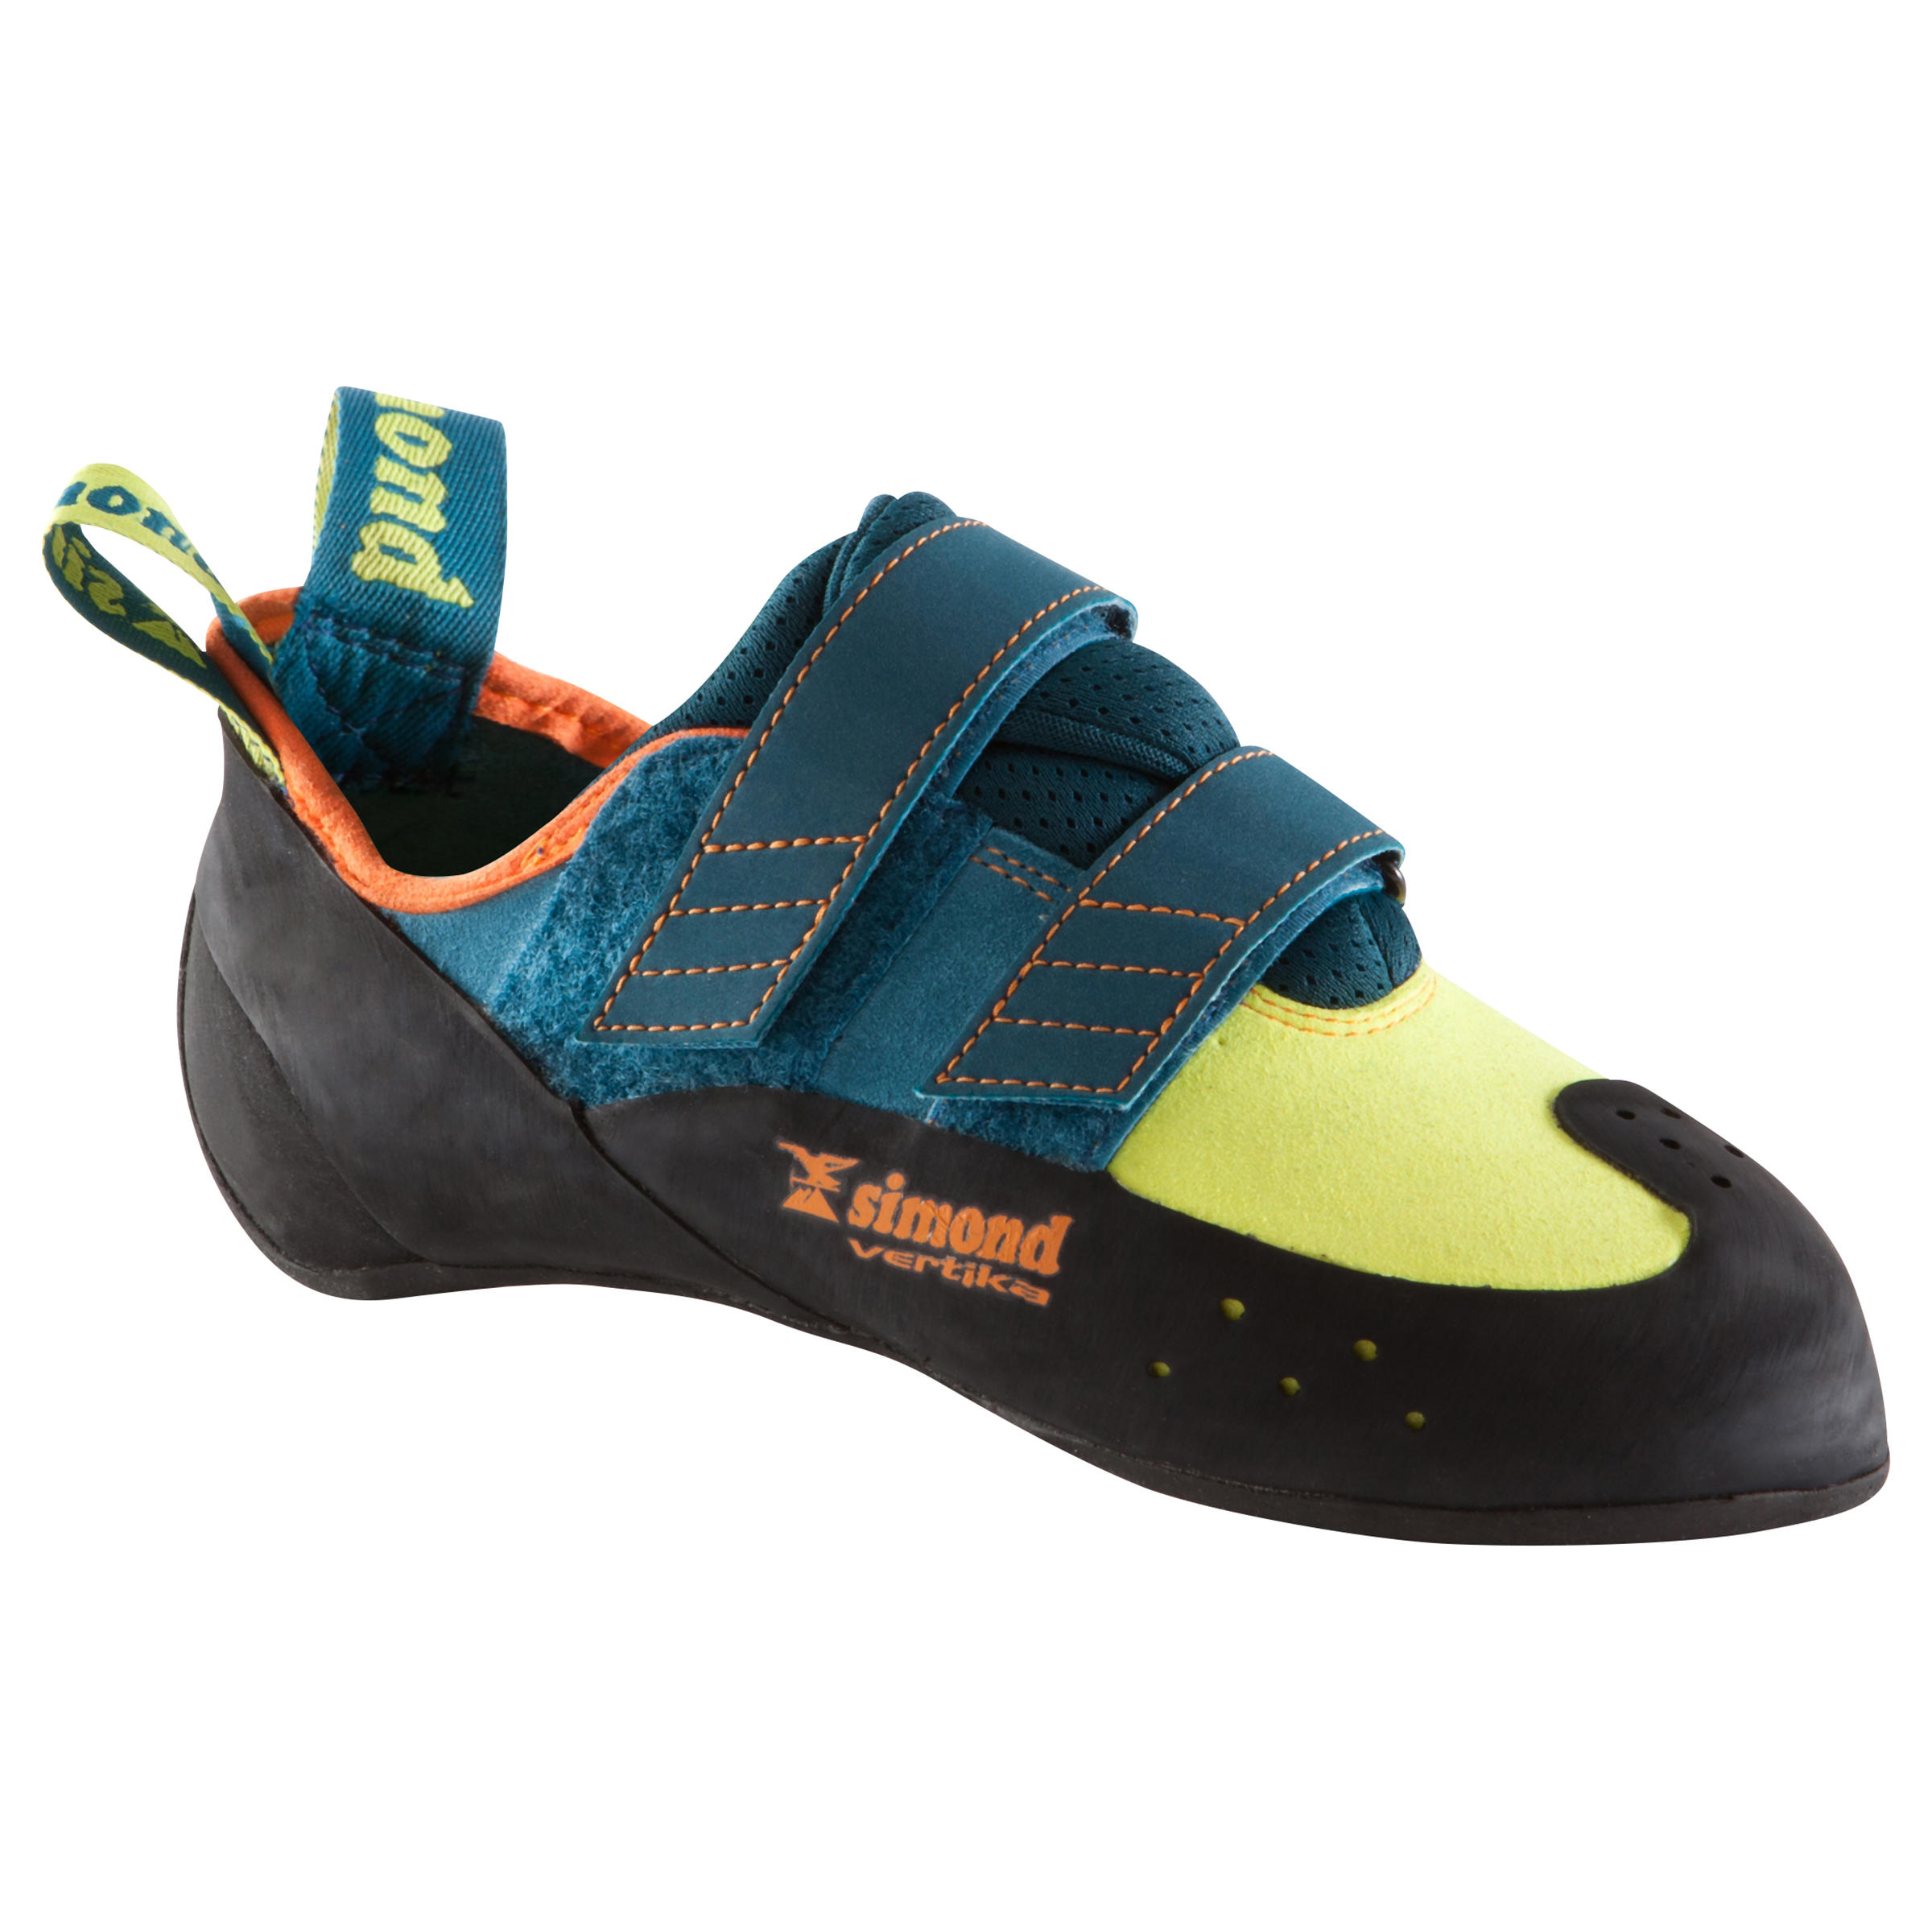 simond rock climbing shoes review